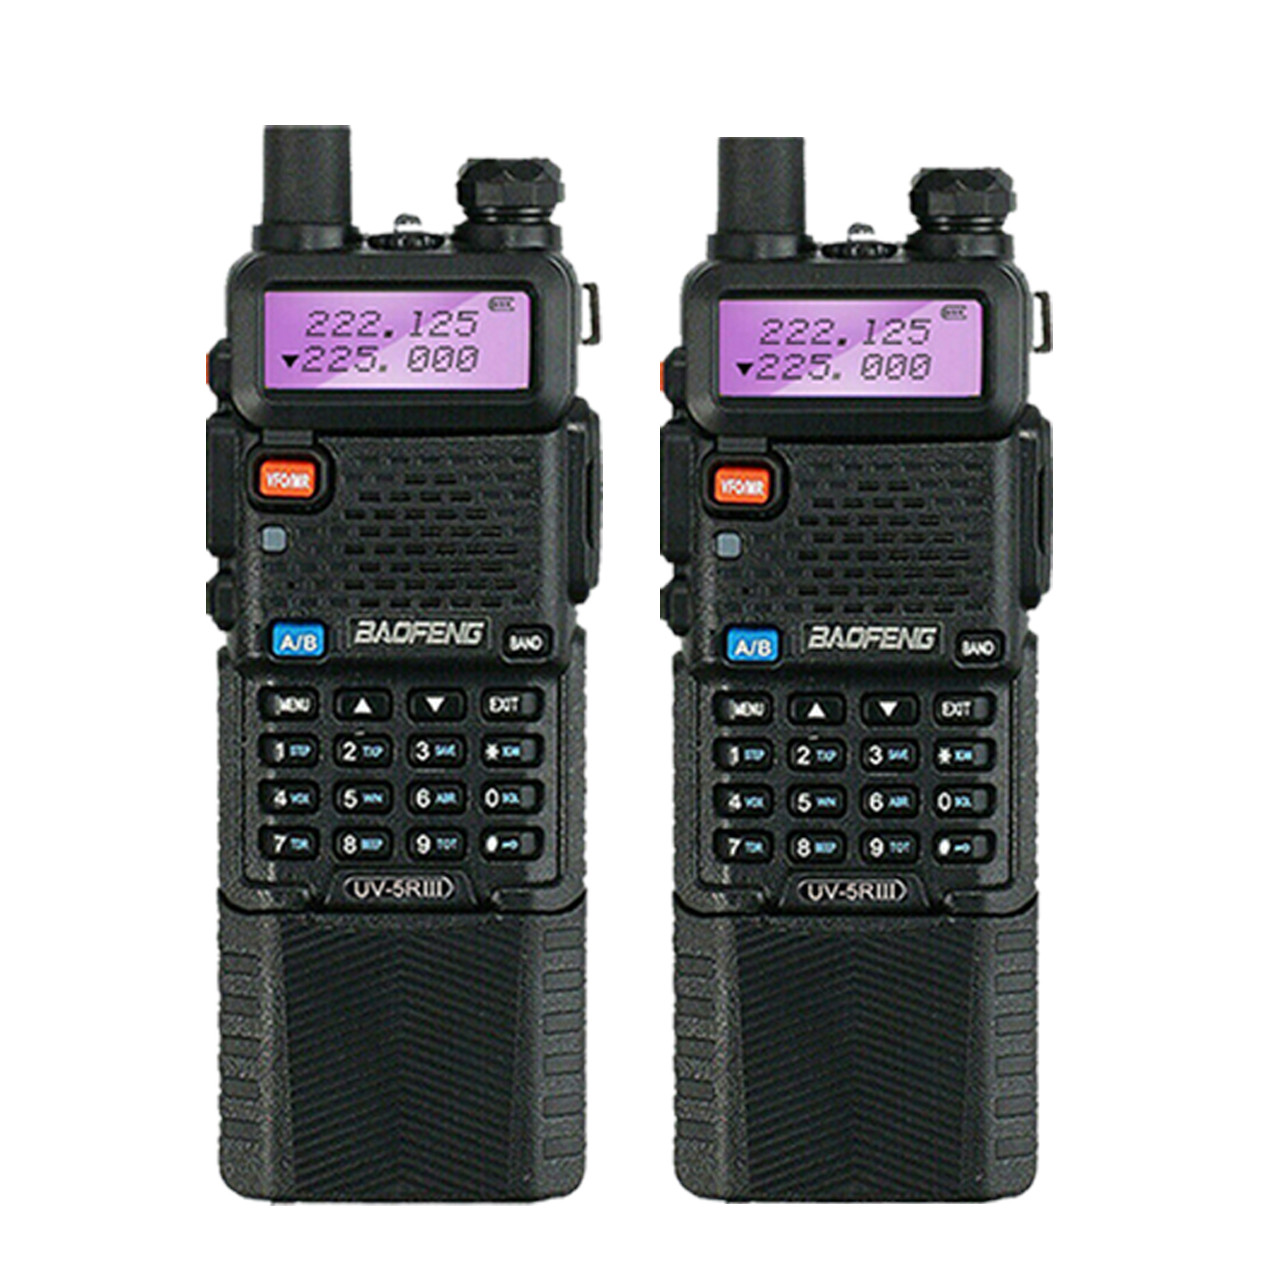 BaoFeng (UV-5R Pro) Ham Radio Handheld Walkie Talkies UHF VHF Dual Band 2-Way Radio Full Kit with an Extra 3800mAh Battery, Earpiece and Programming C - 4